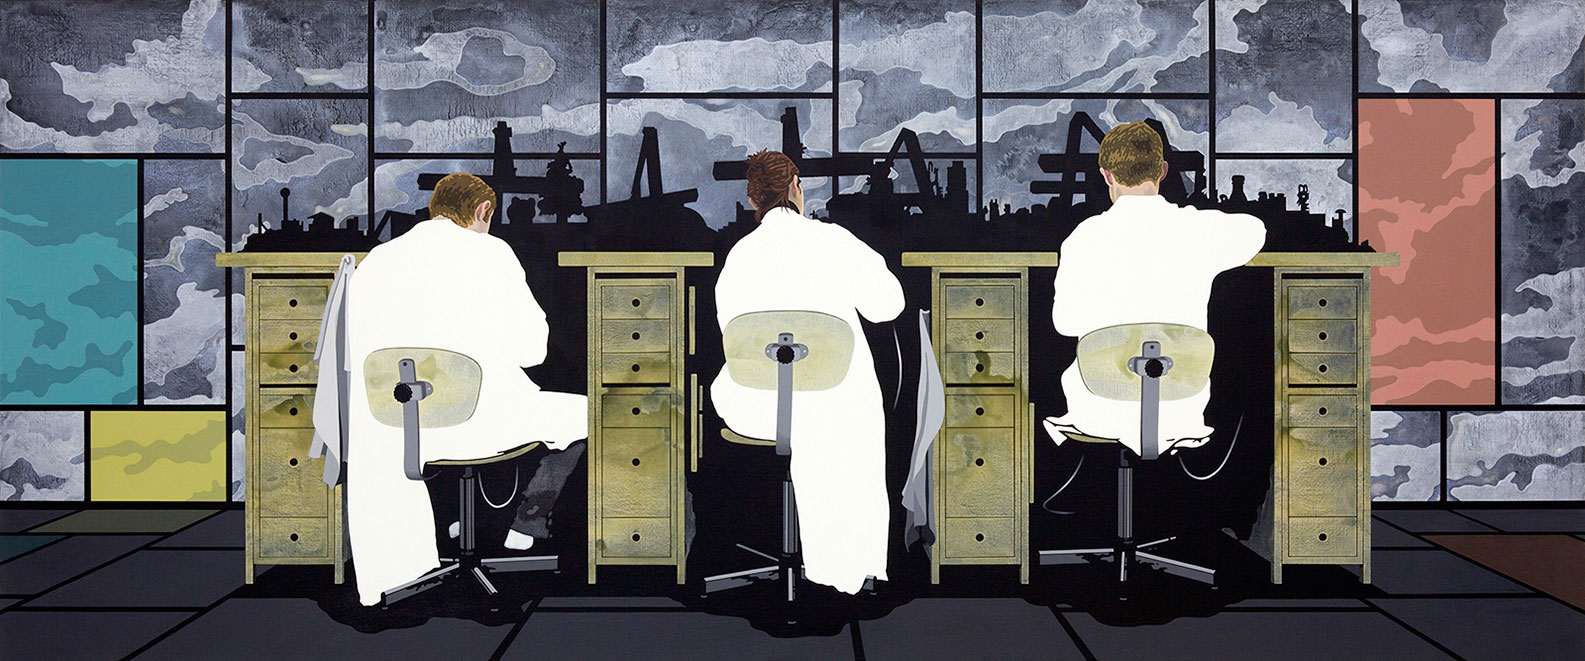 Henrik Samuelsson, "Extended Minute", 2014, mixed media on canvas, 100 x 240 cm